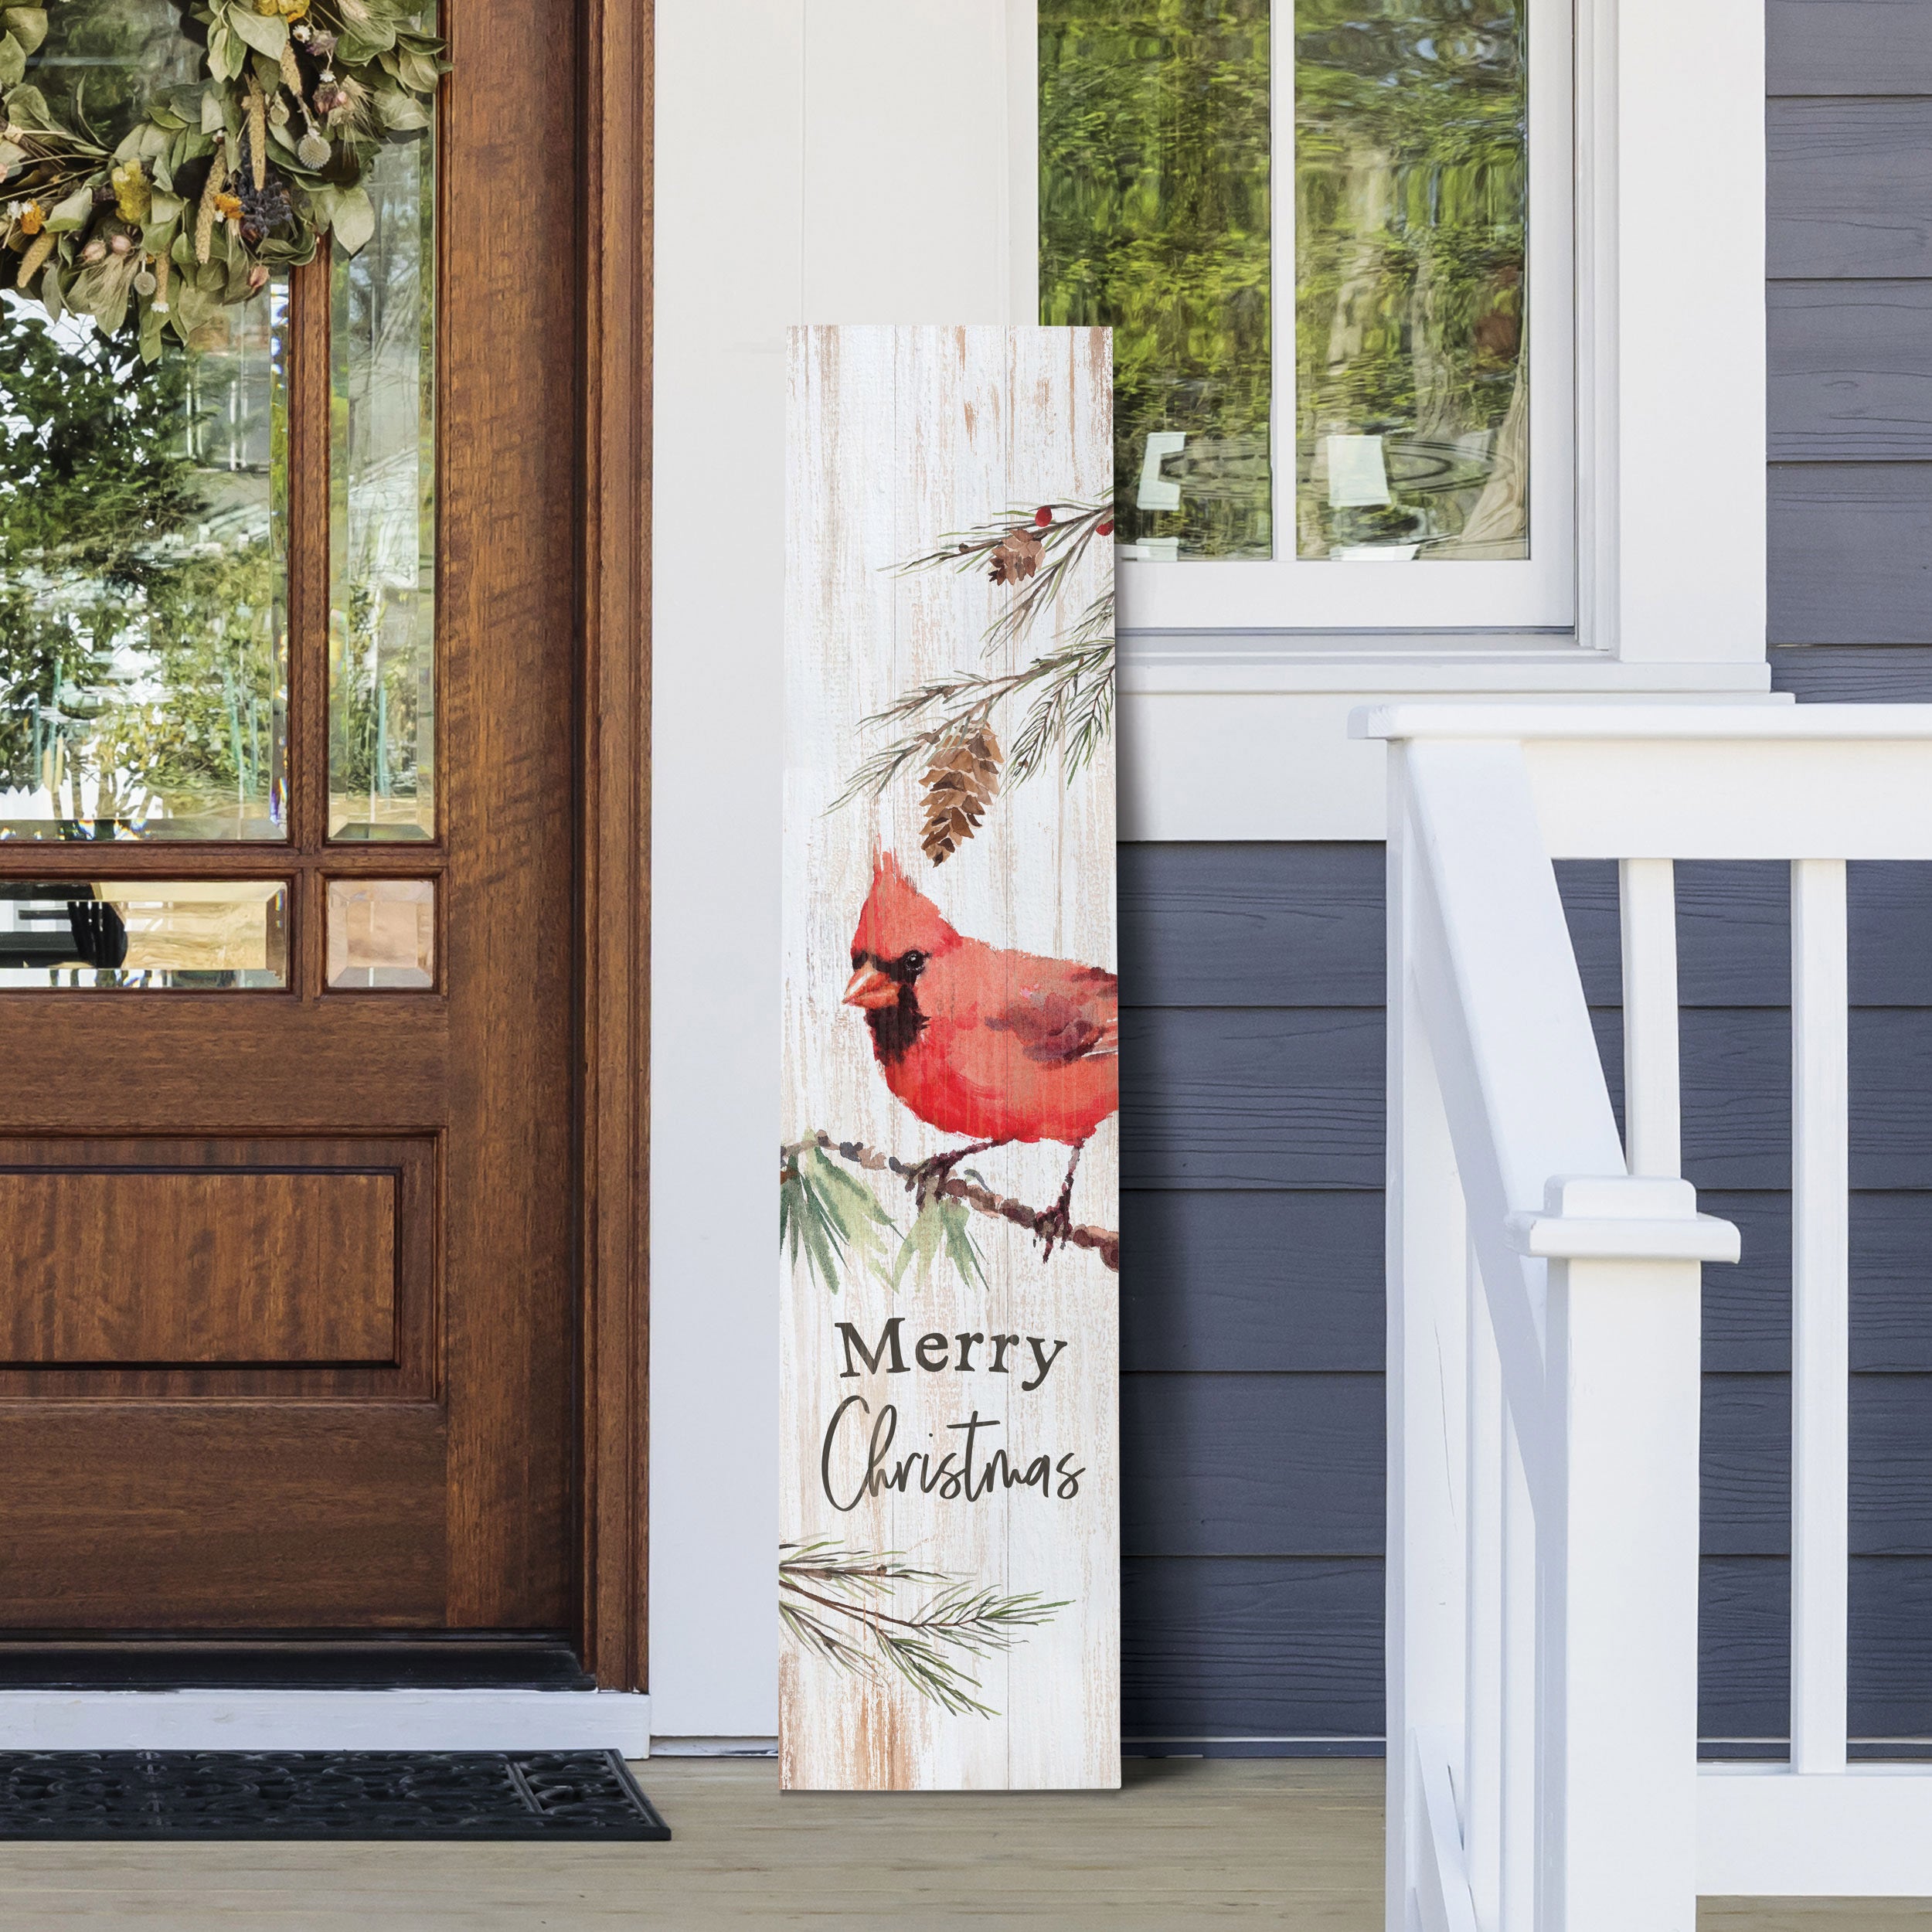 Merry Christmas Outdoor Porch Sign